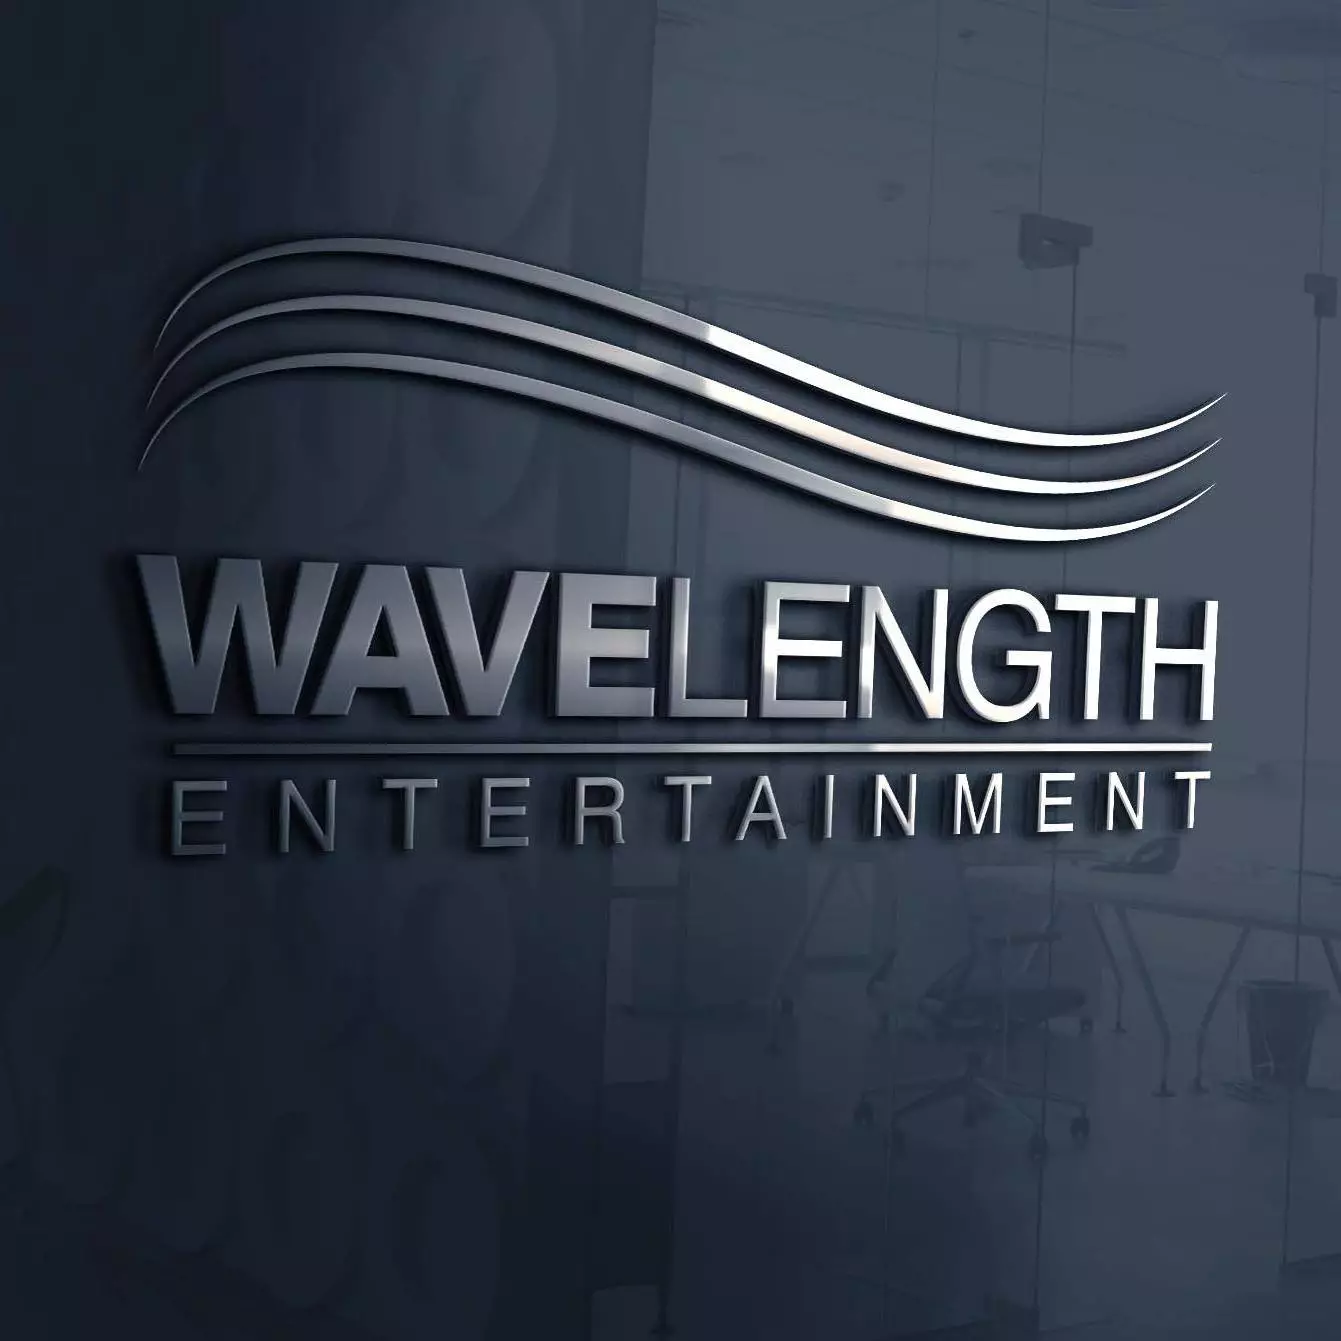 Wavelength Entertainment